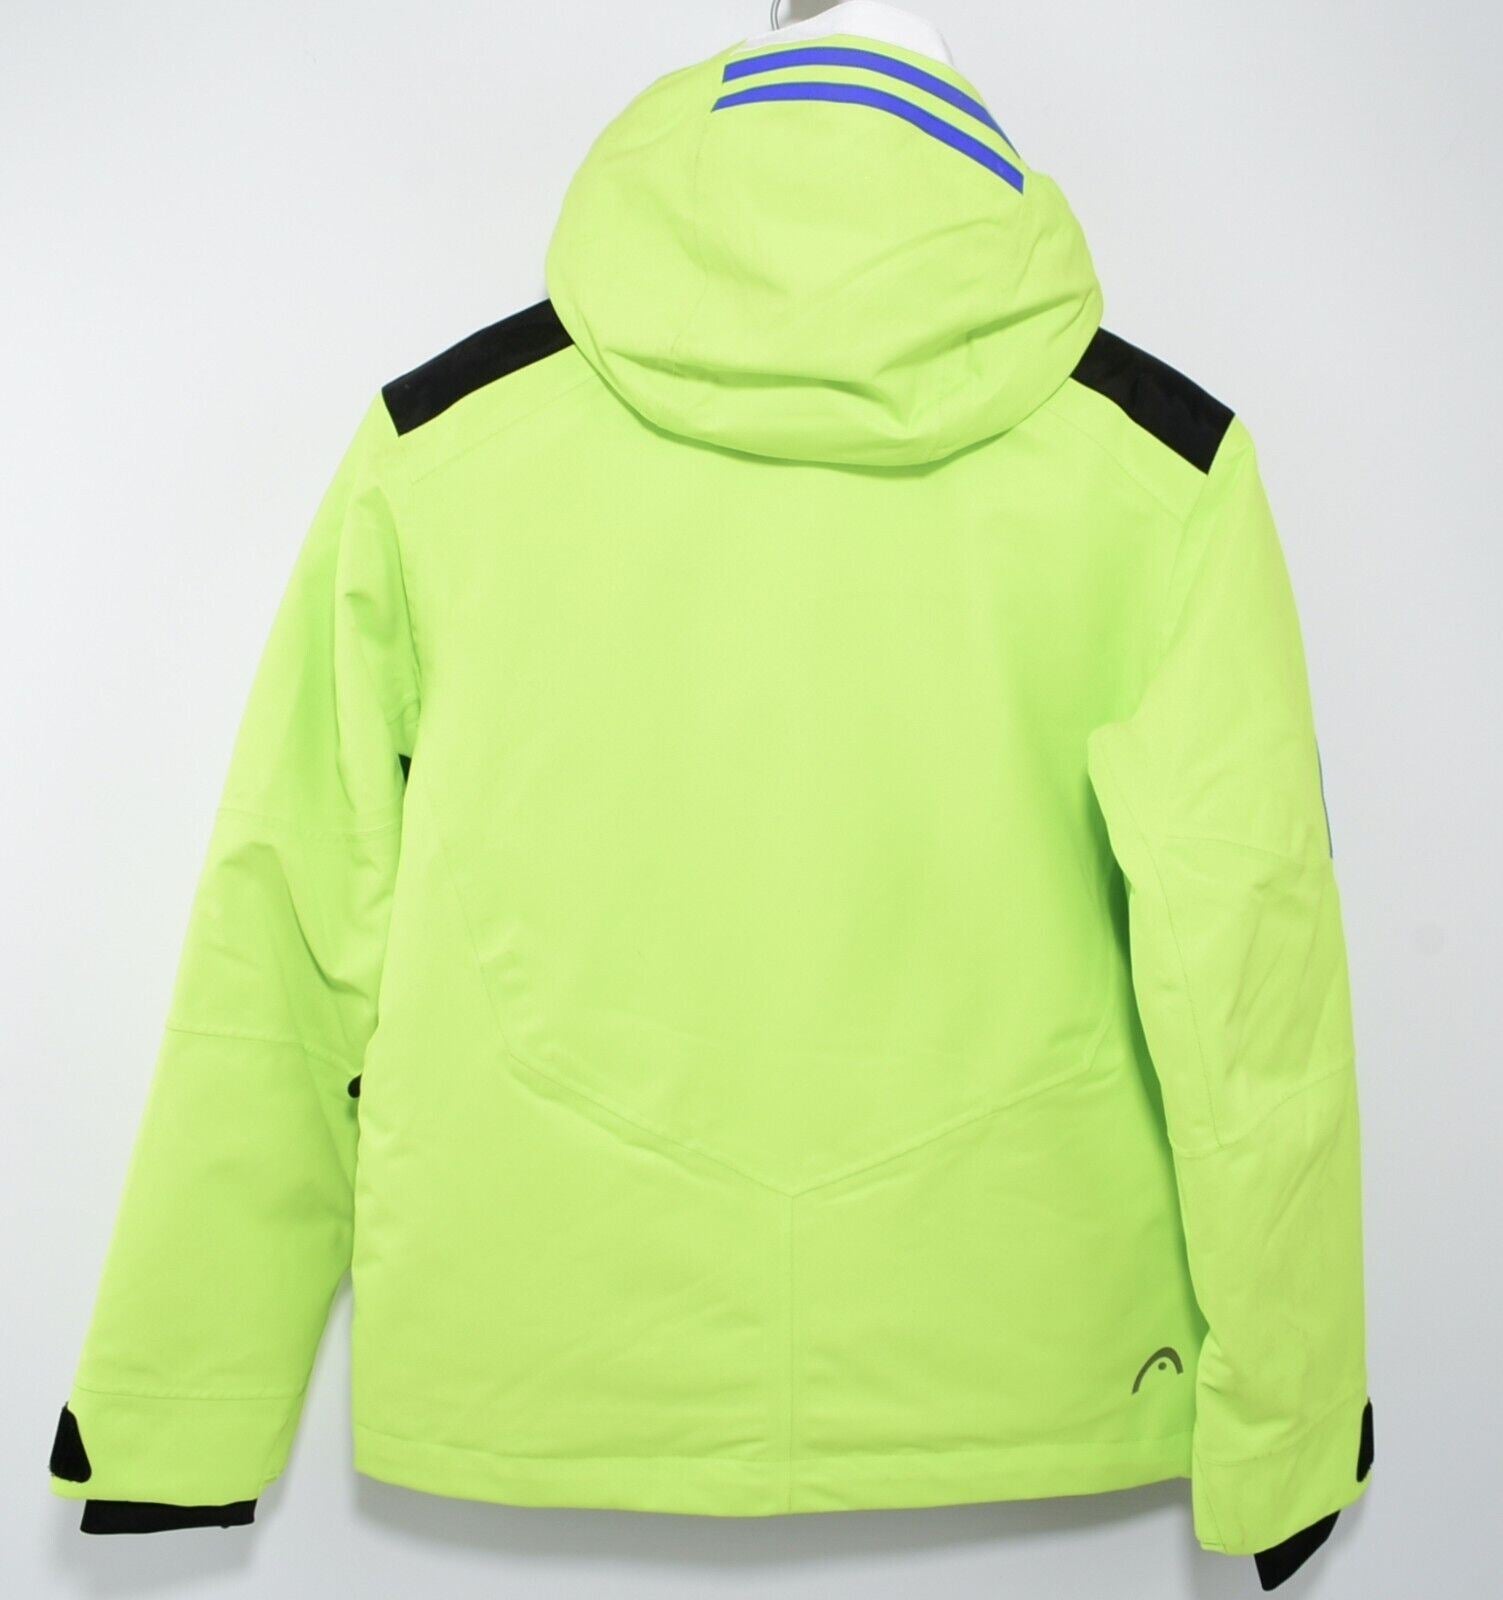 HEAD PRO JUNIOR Boys Ski Jacket, Neon Green, size 10 years /140cm